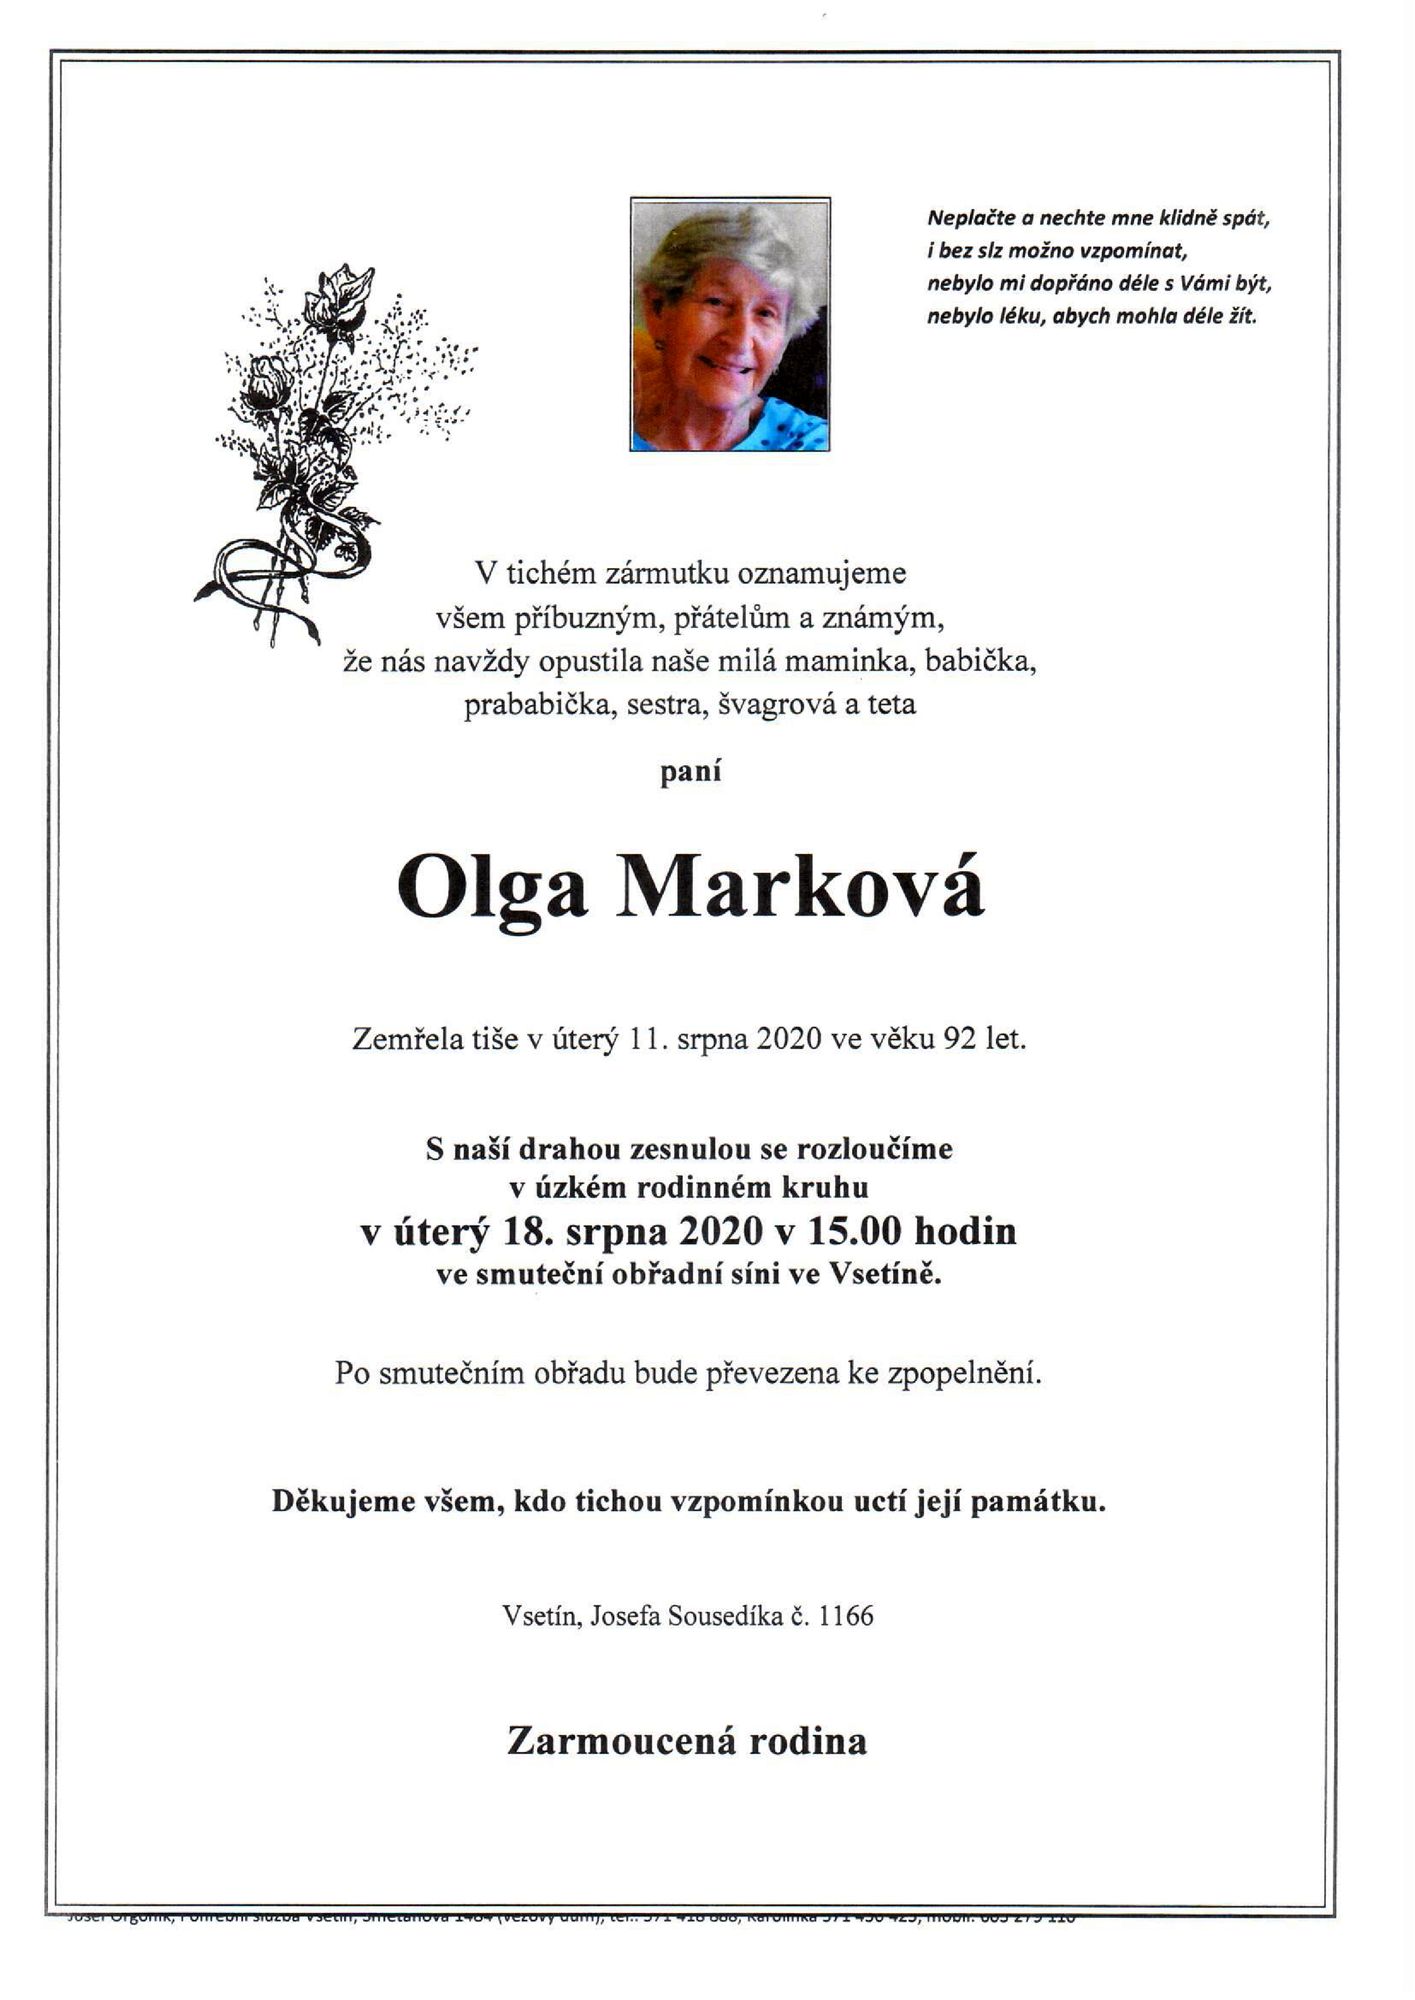 Olga Marková